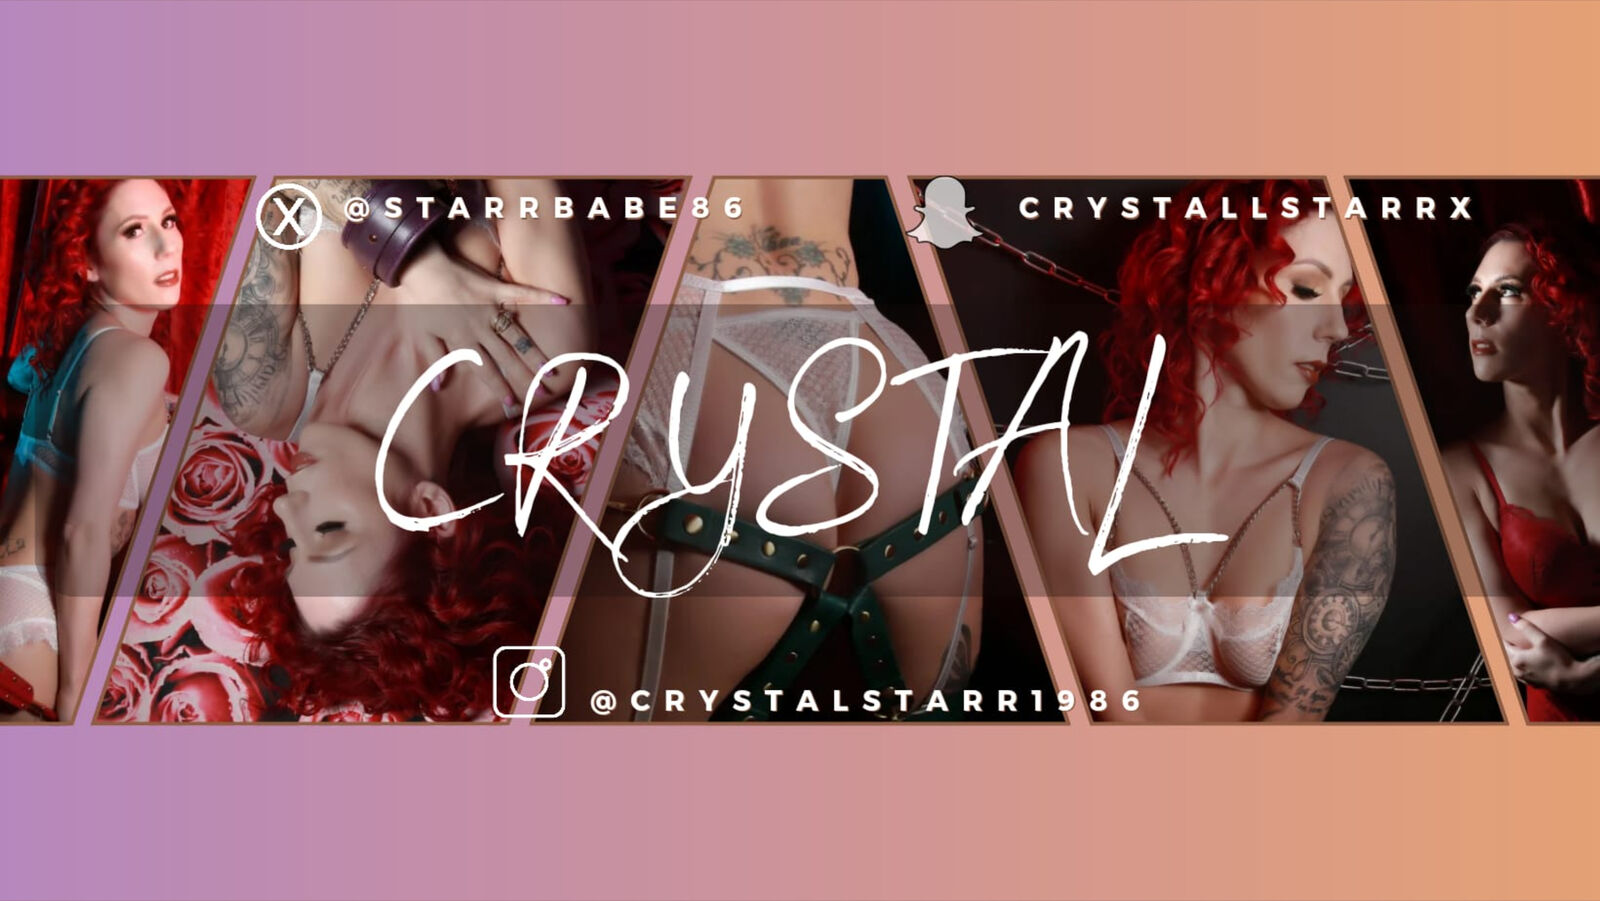 See Crystal Starr profile